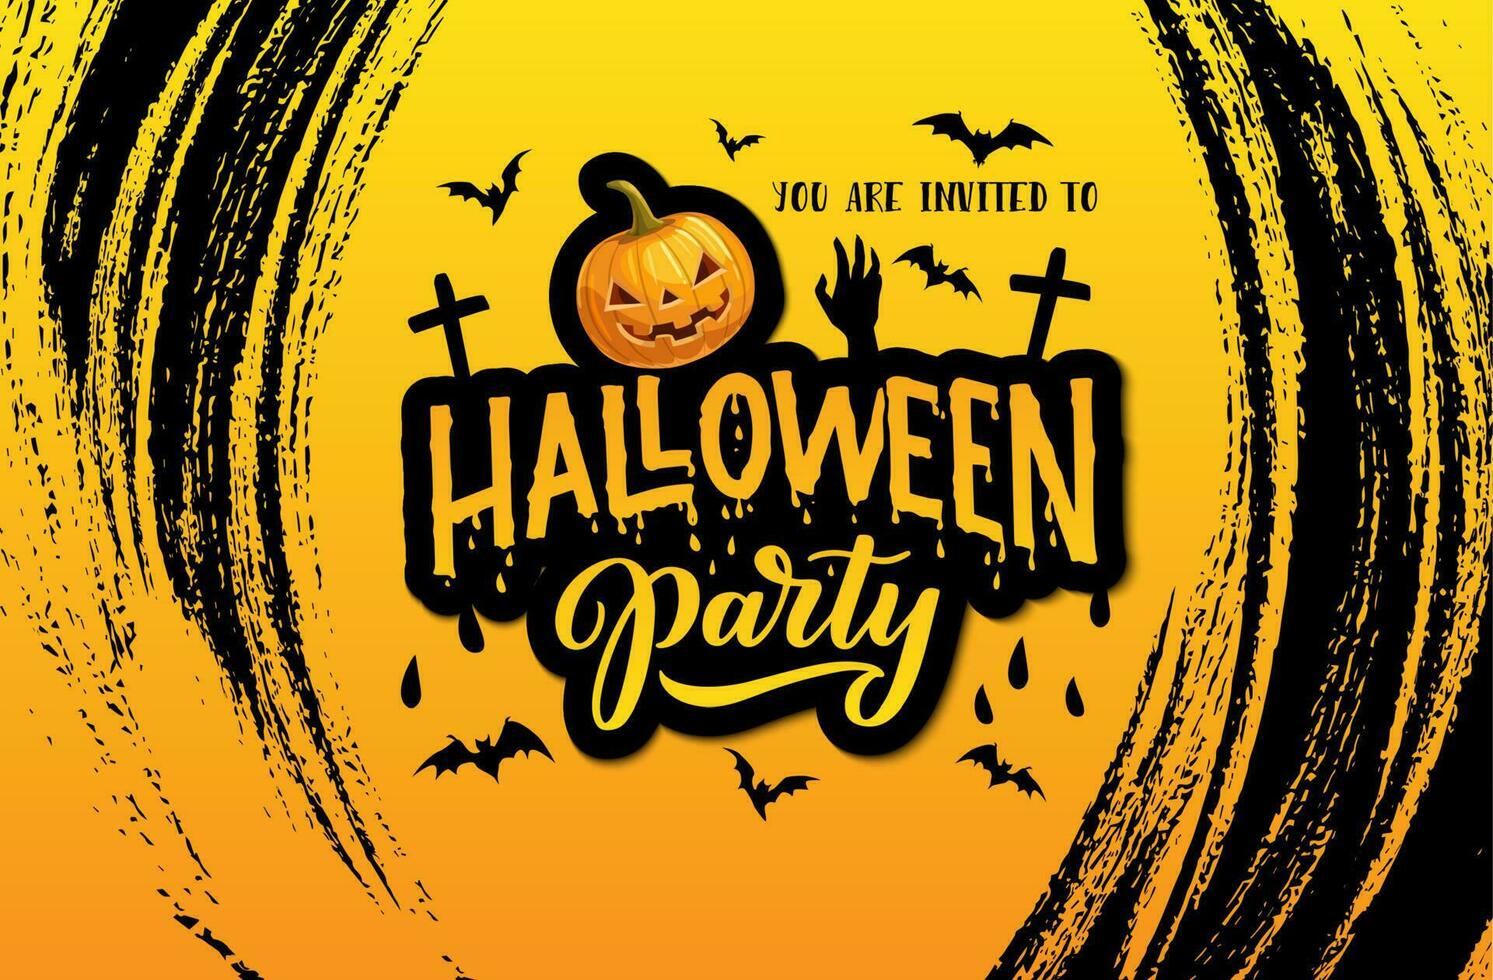 Halloween horror party invitation with pumpkin vector